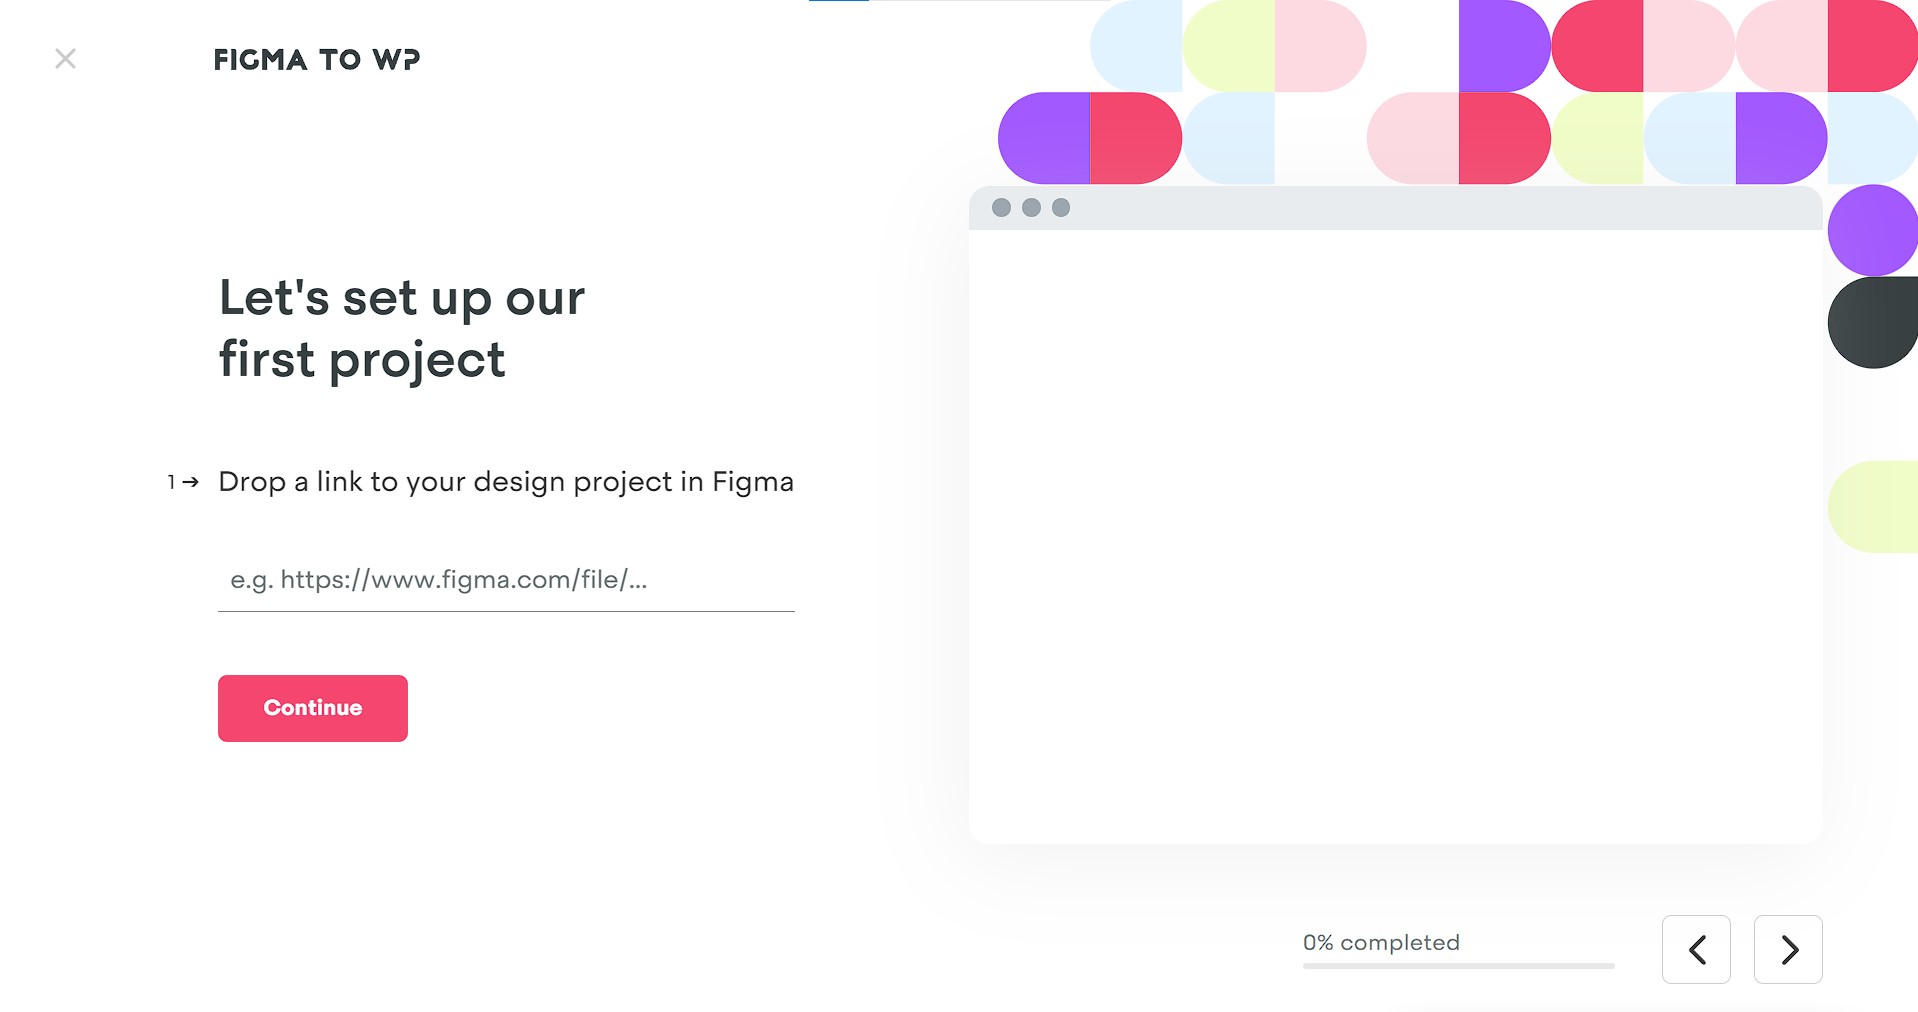 Figma2WP project dropoff form